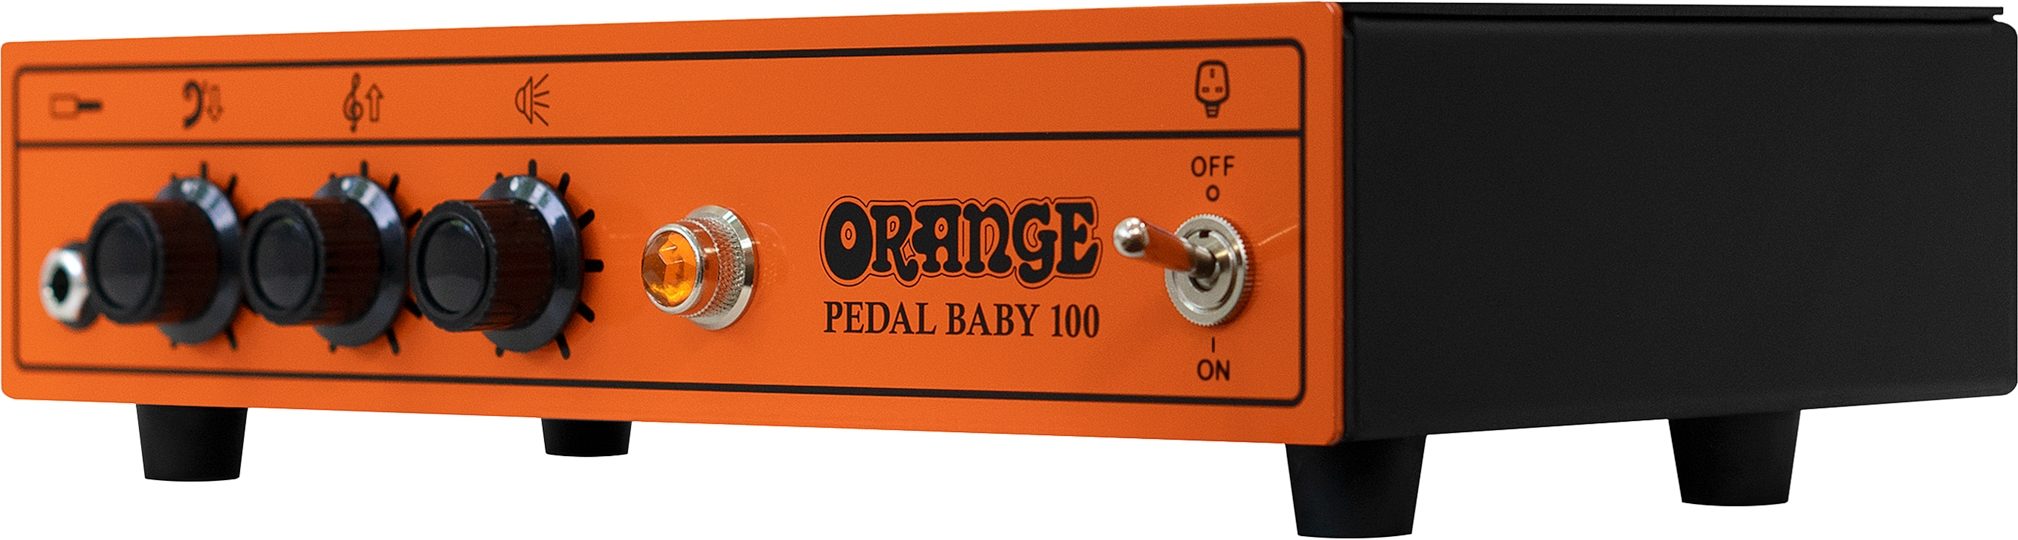 Orange Pedal Baby 100 Guitar Amplifier Head | zZounds